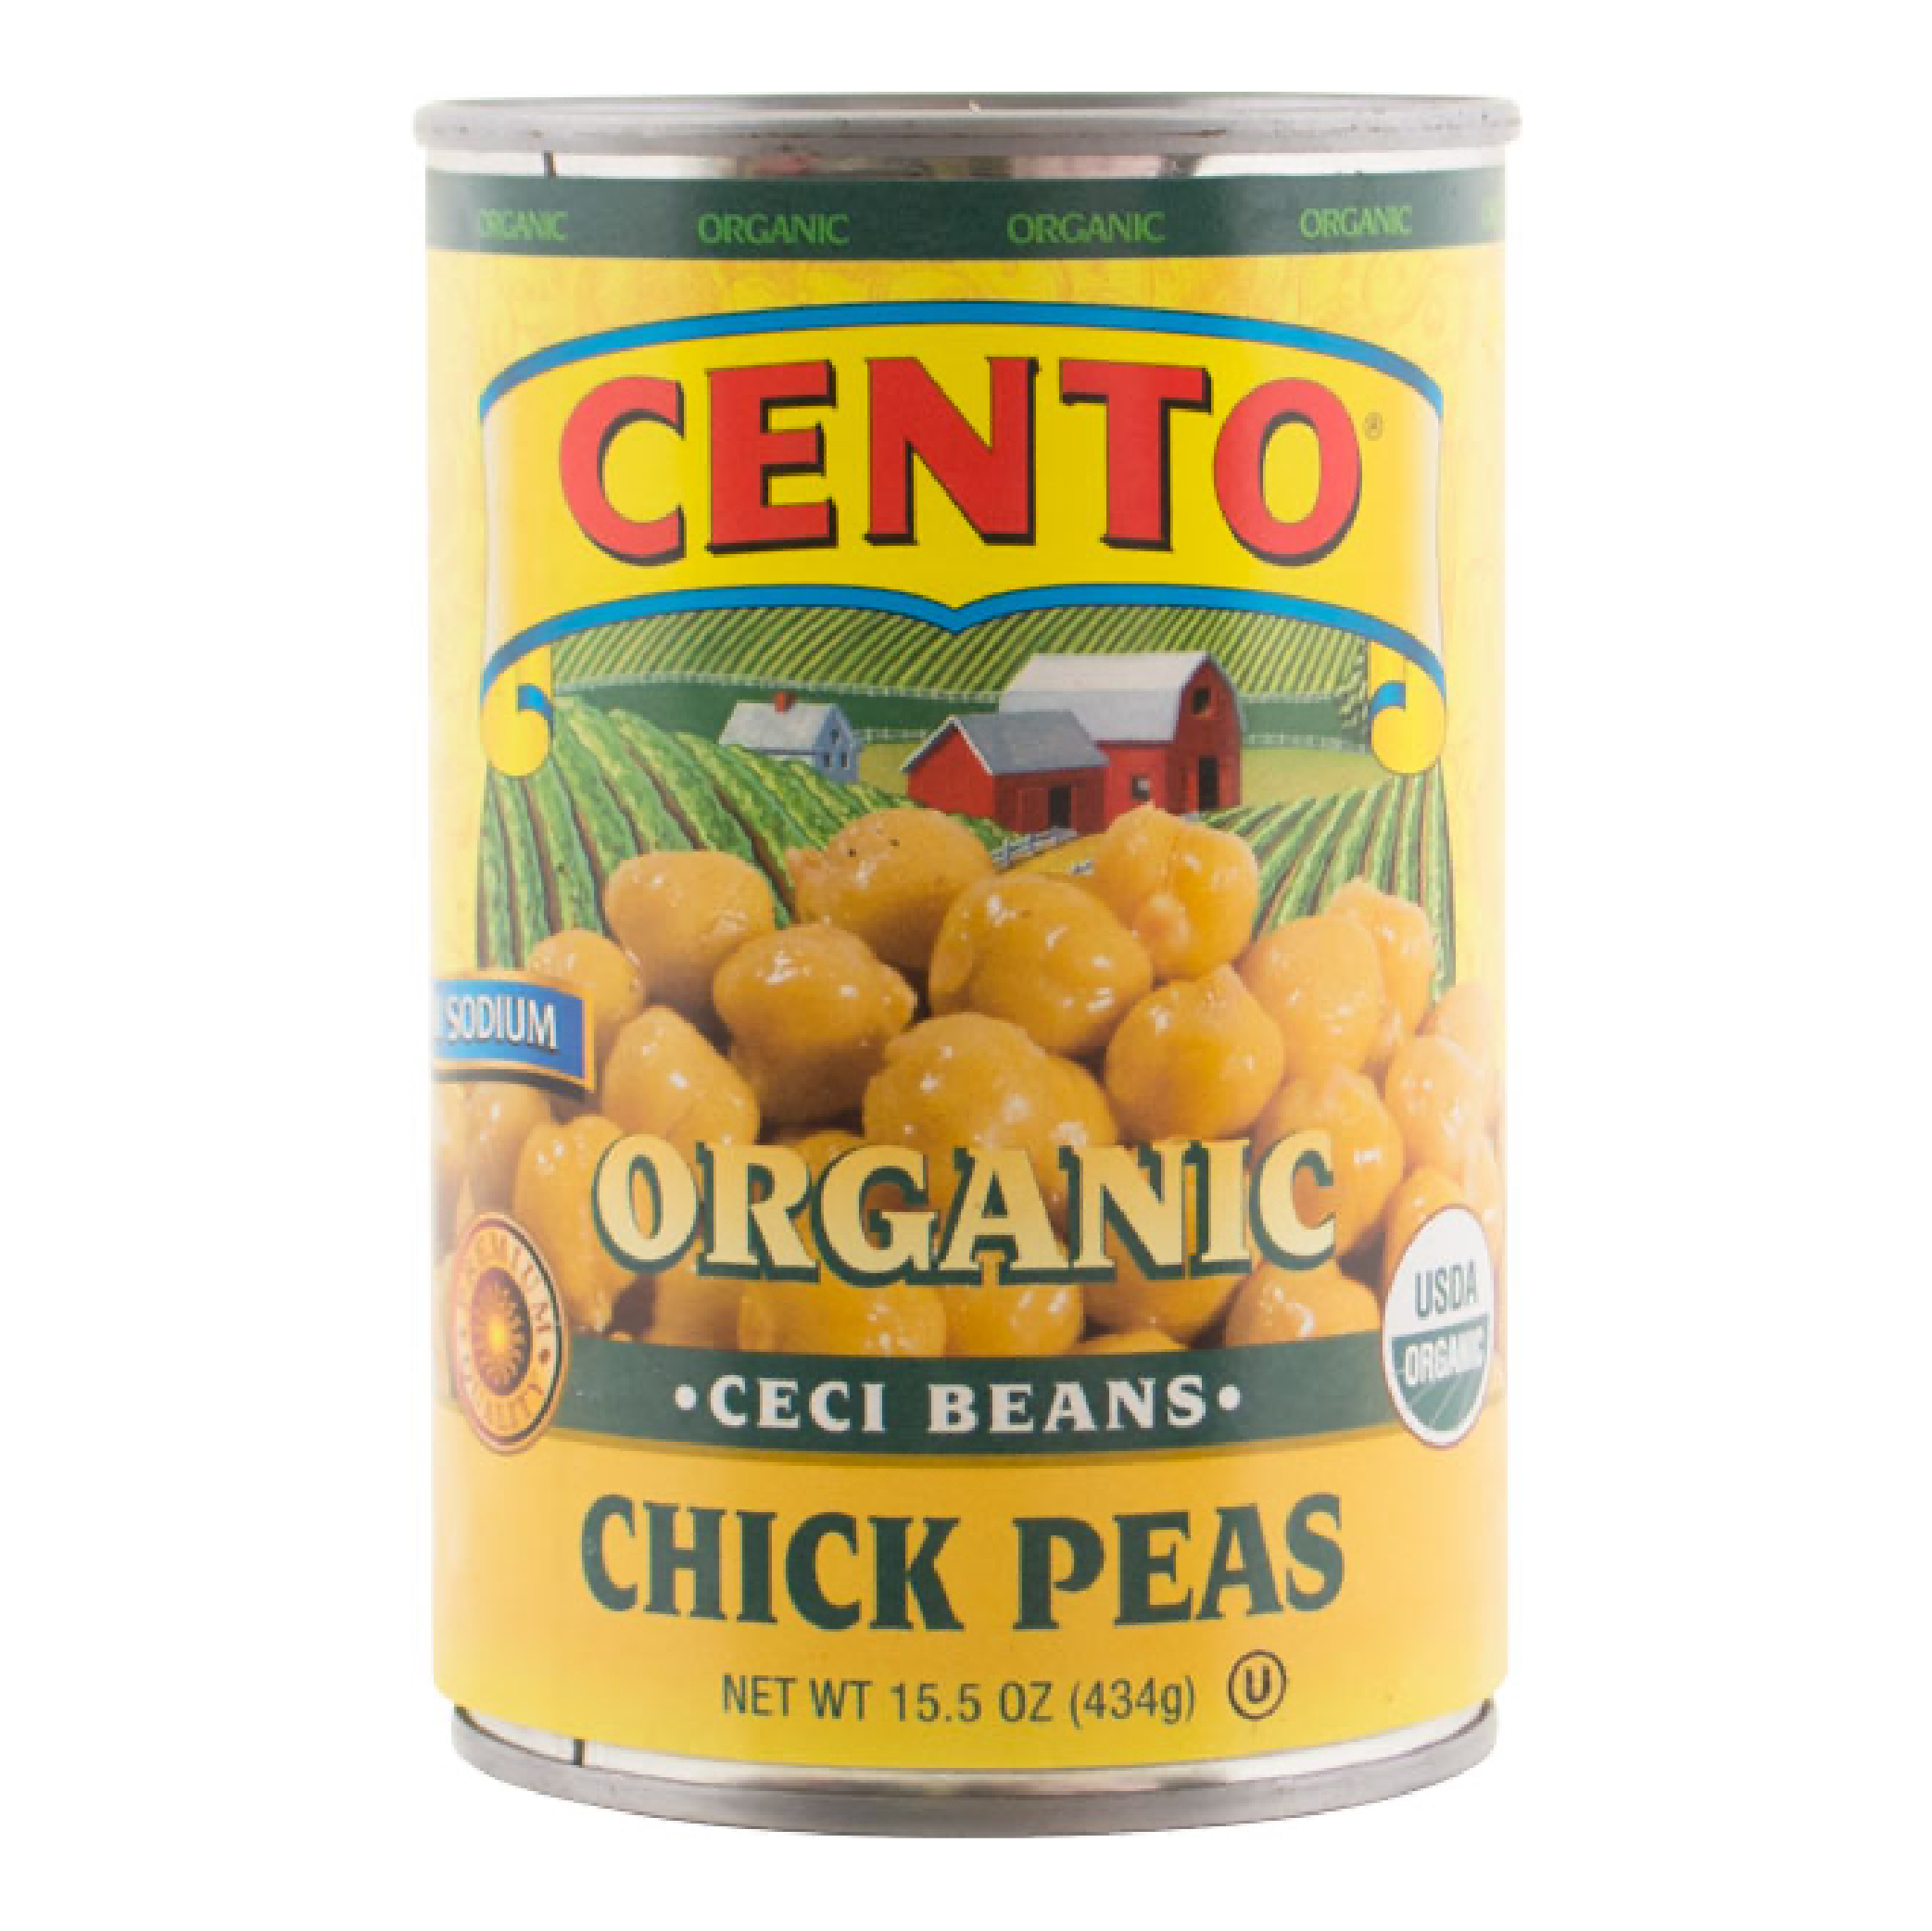 Cento Organic Chick Peas - Product